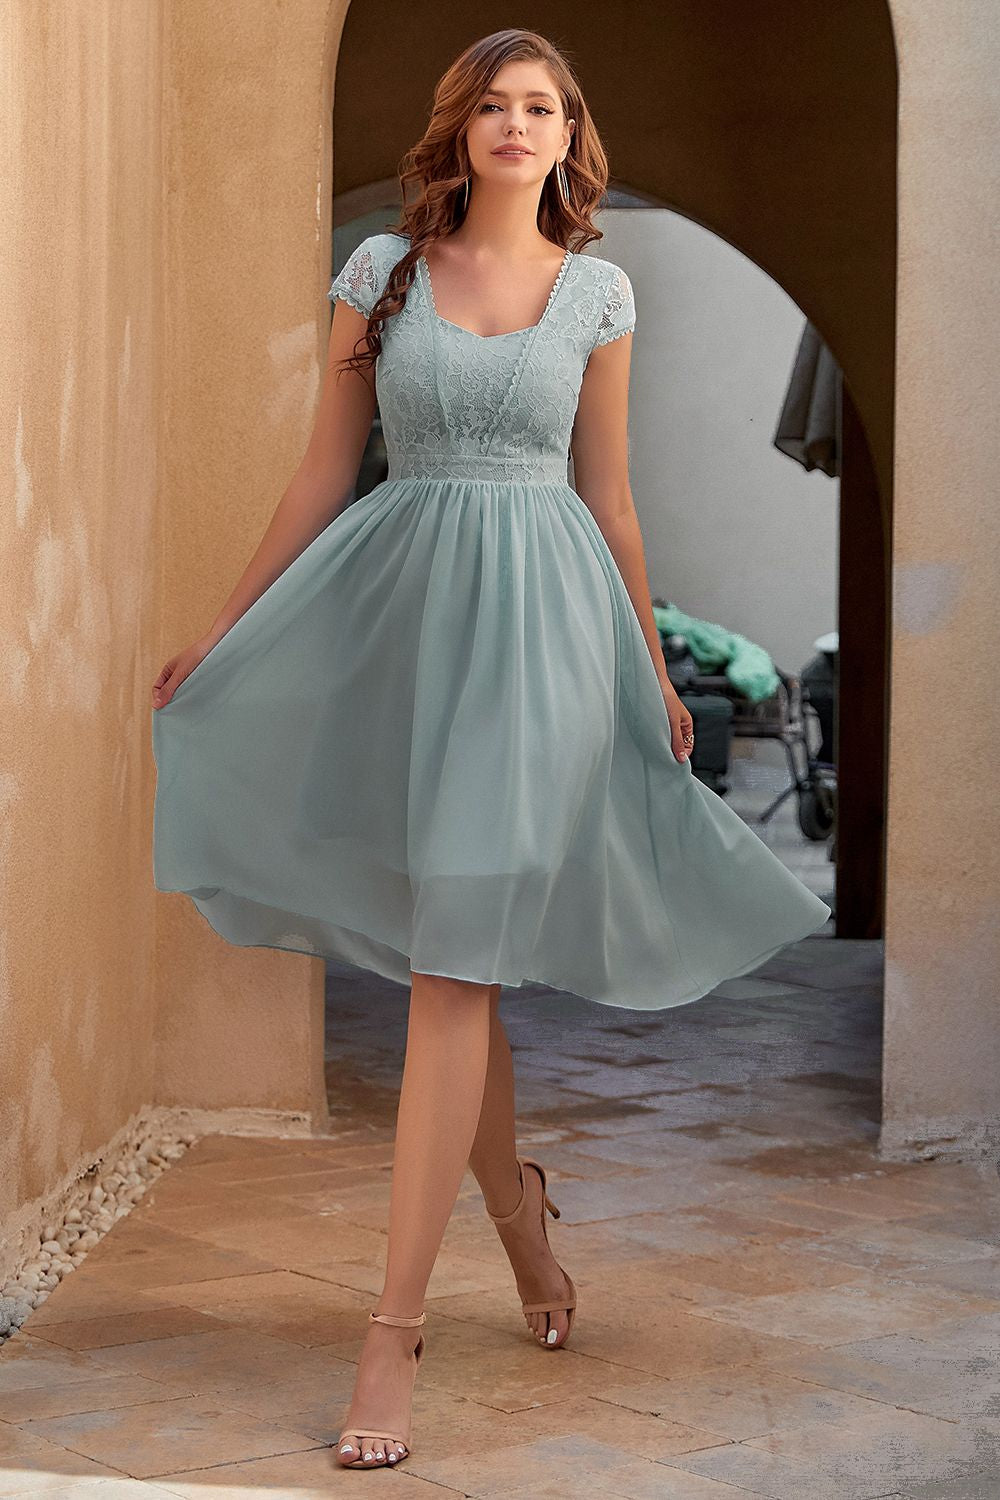 Blue Chiffon Wedding Guest Dress with Lace